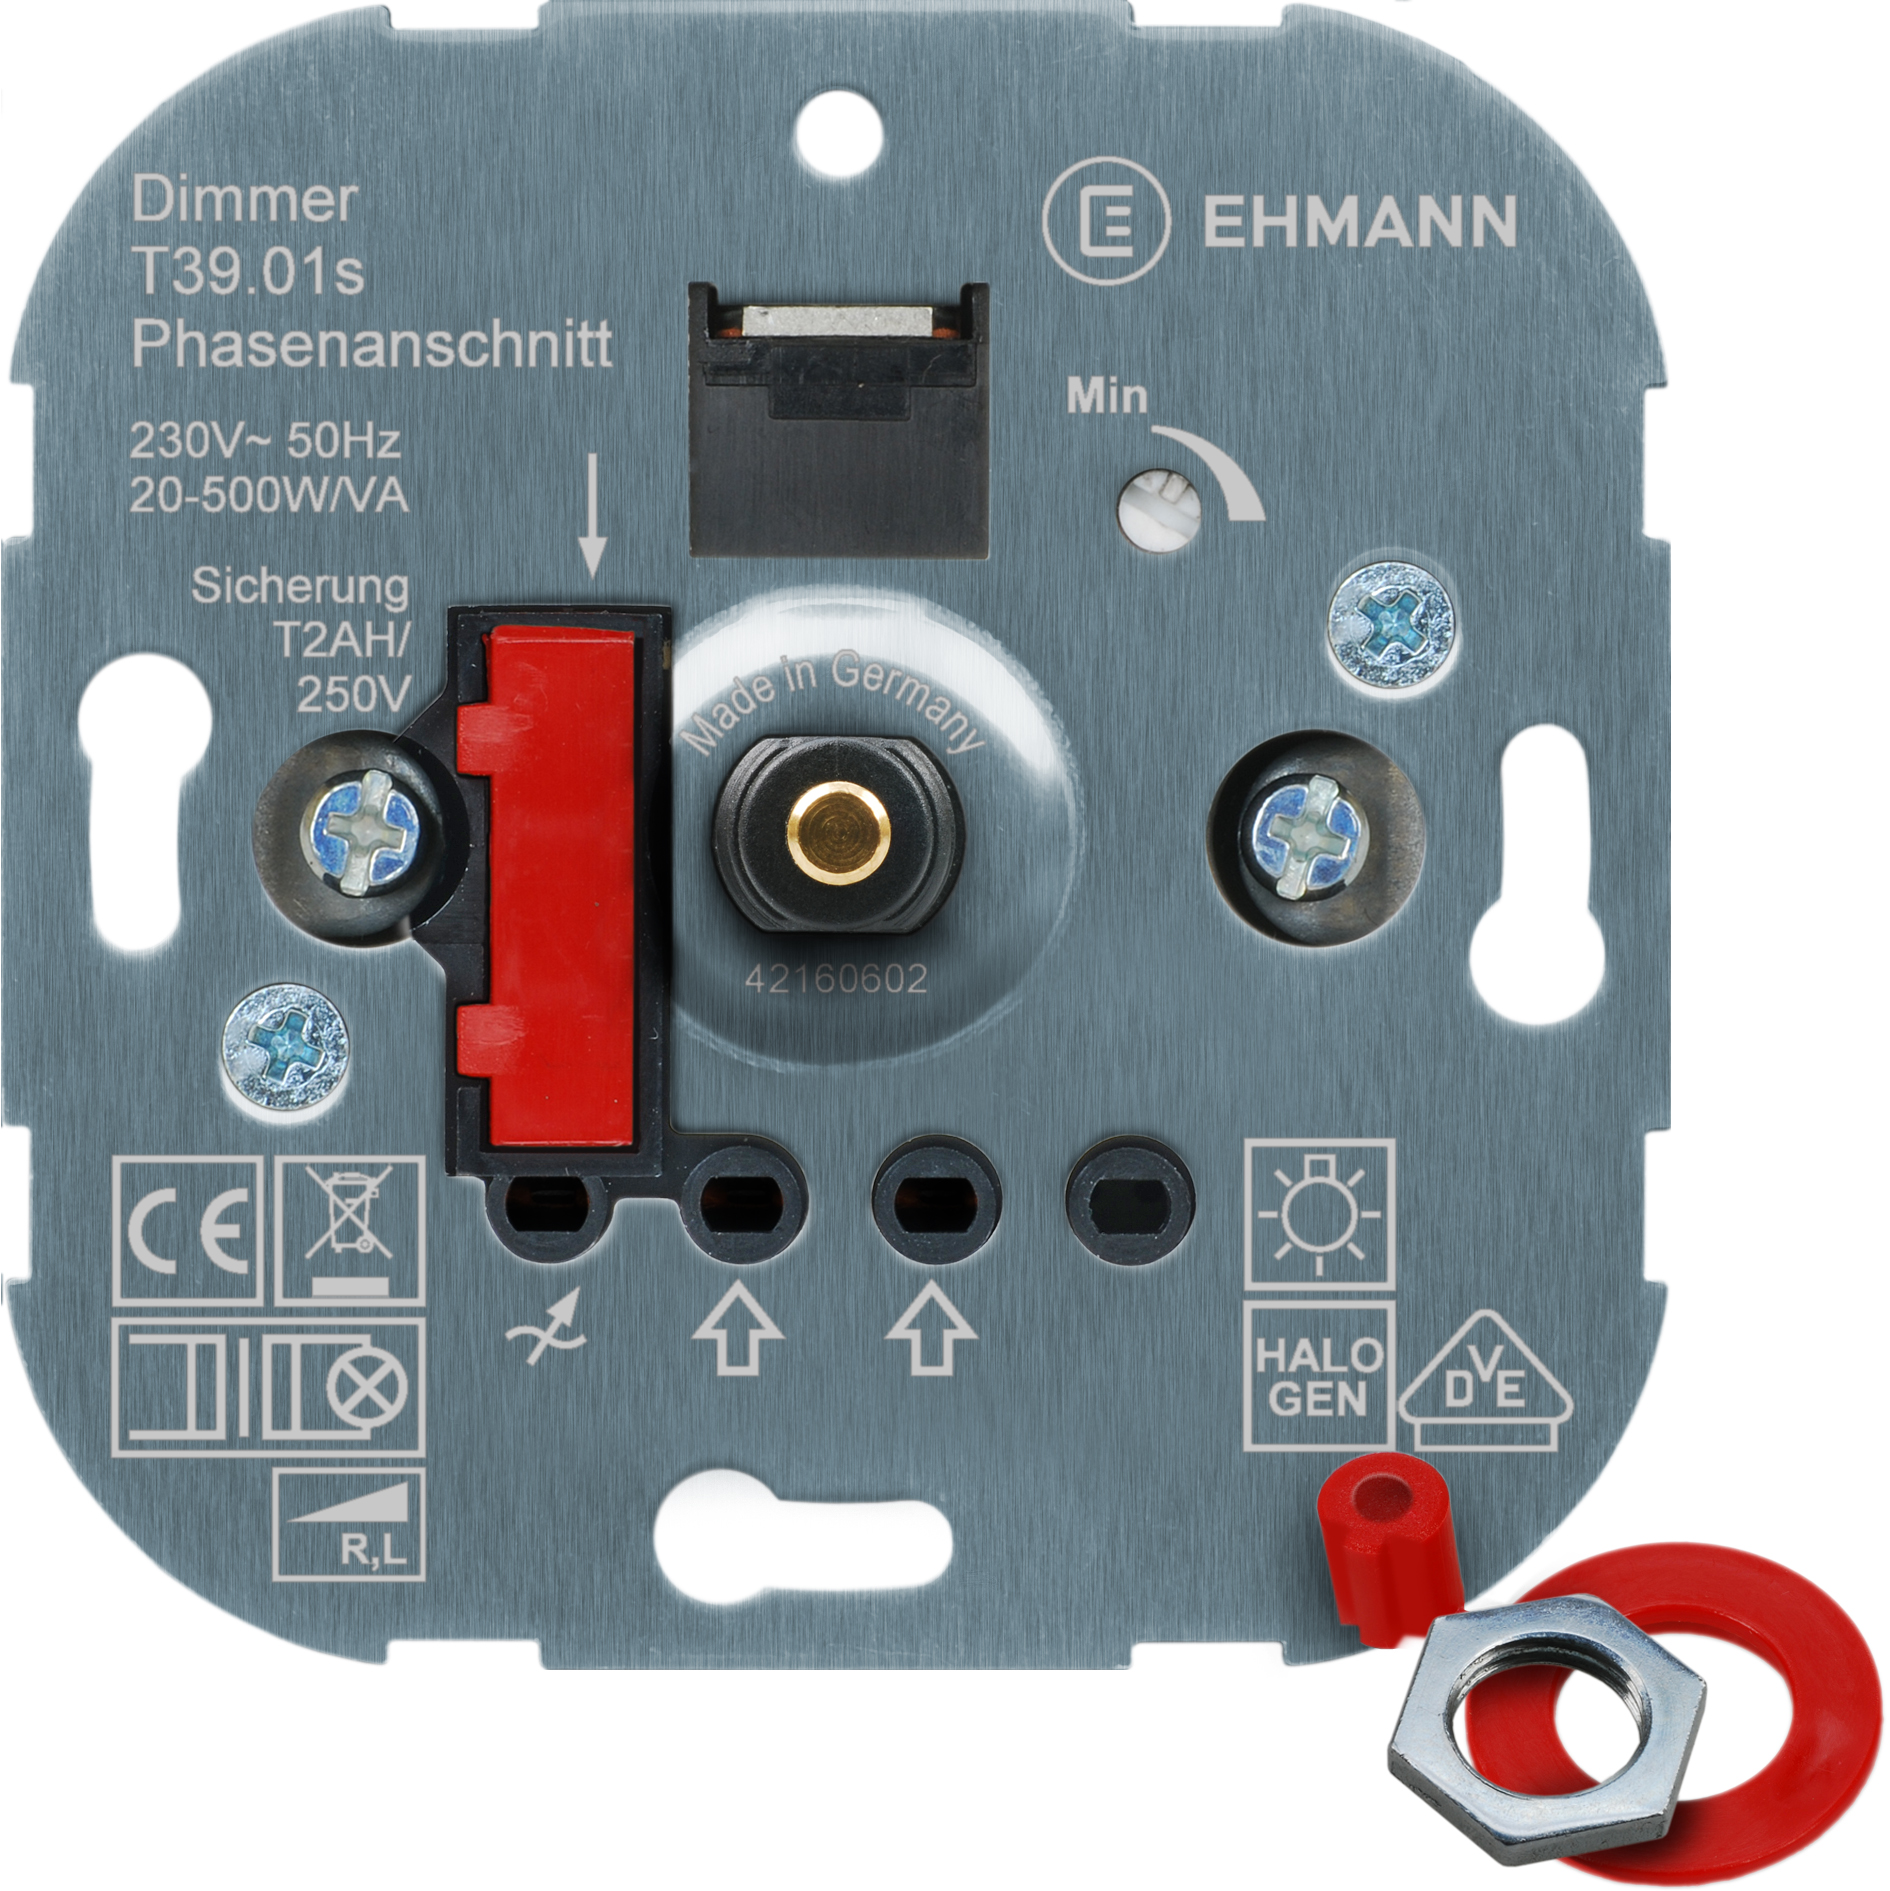 EHMANN 3900x0100 T39.01 Unterputz-Dimmer, Phasenanschnitt, 230 V, 50 Hz, Leistung: 20-500 W/VA, inkl. Schalterprogramm-Adapter